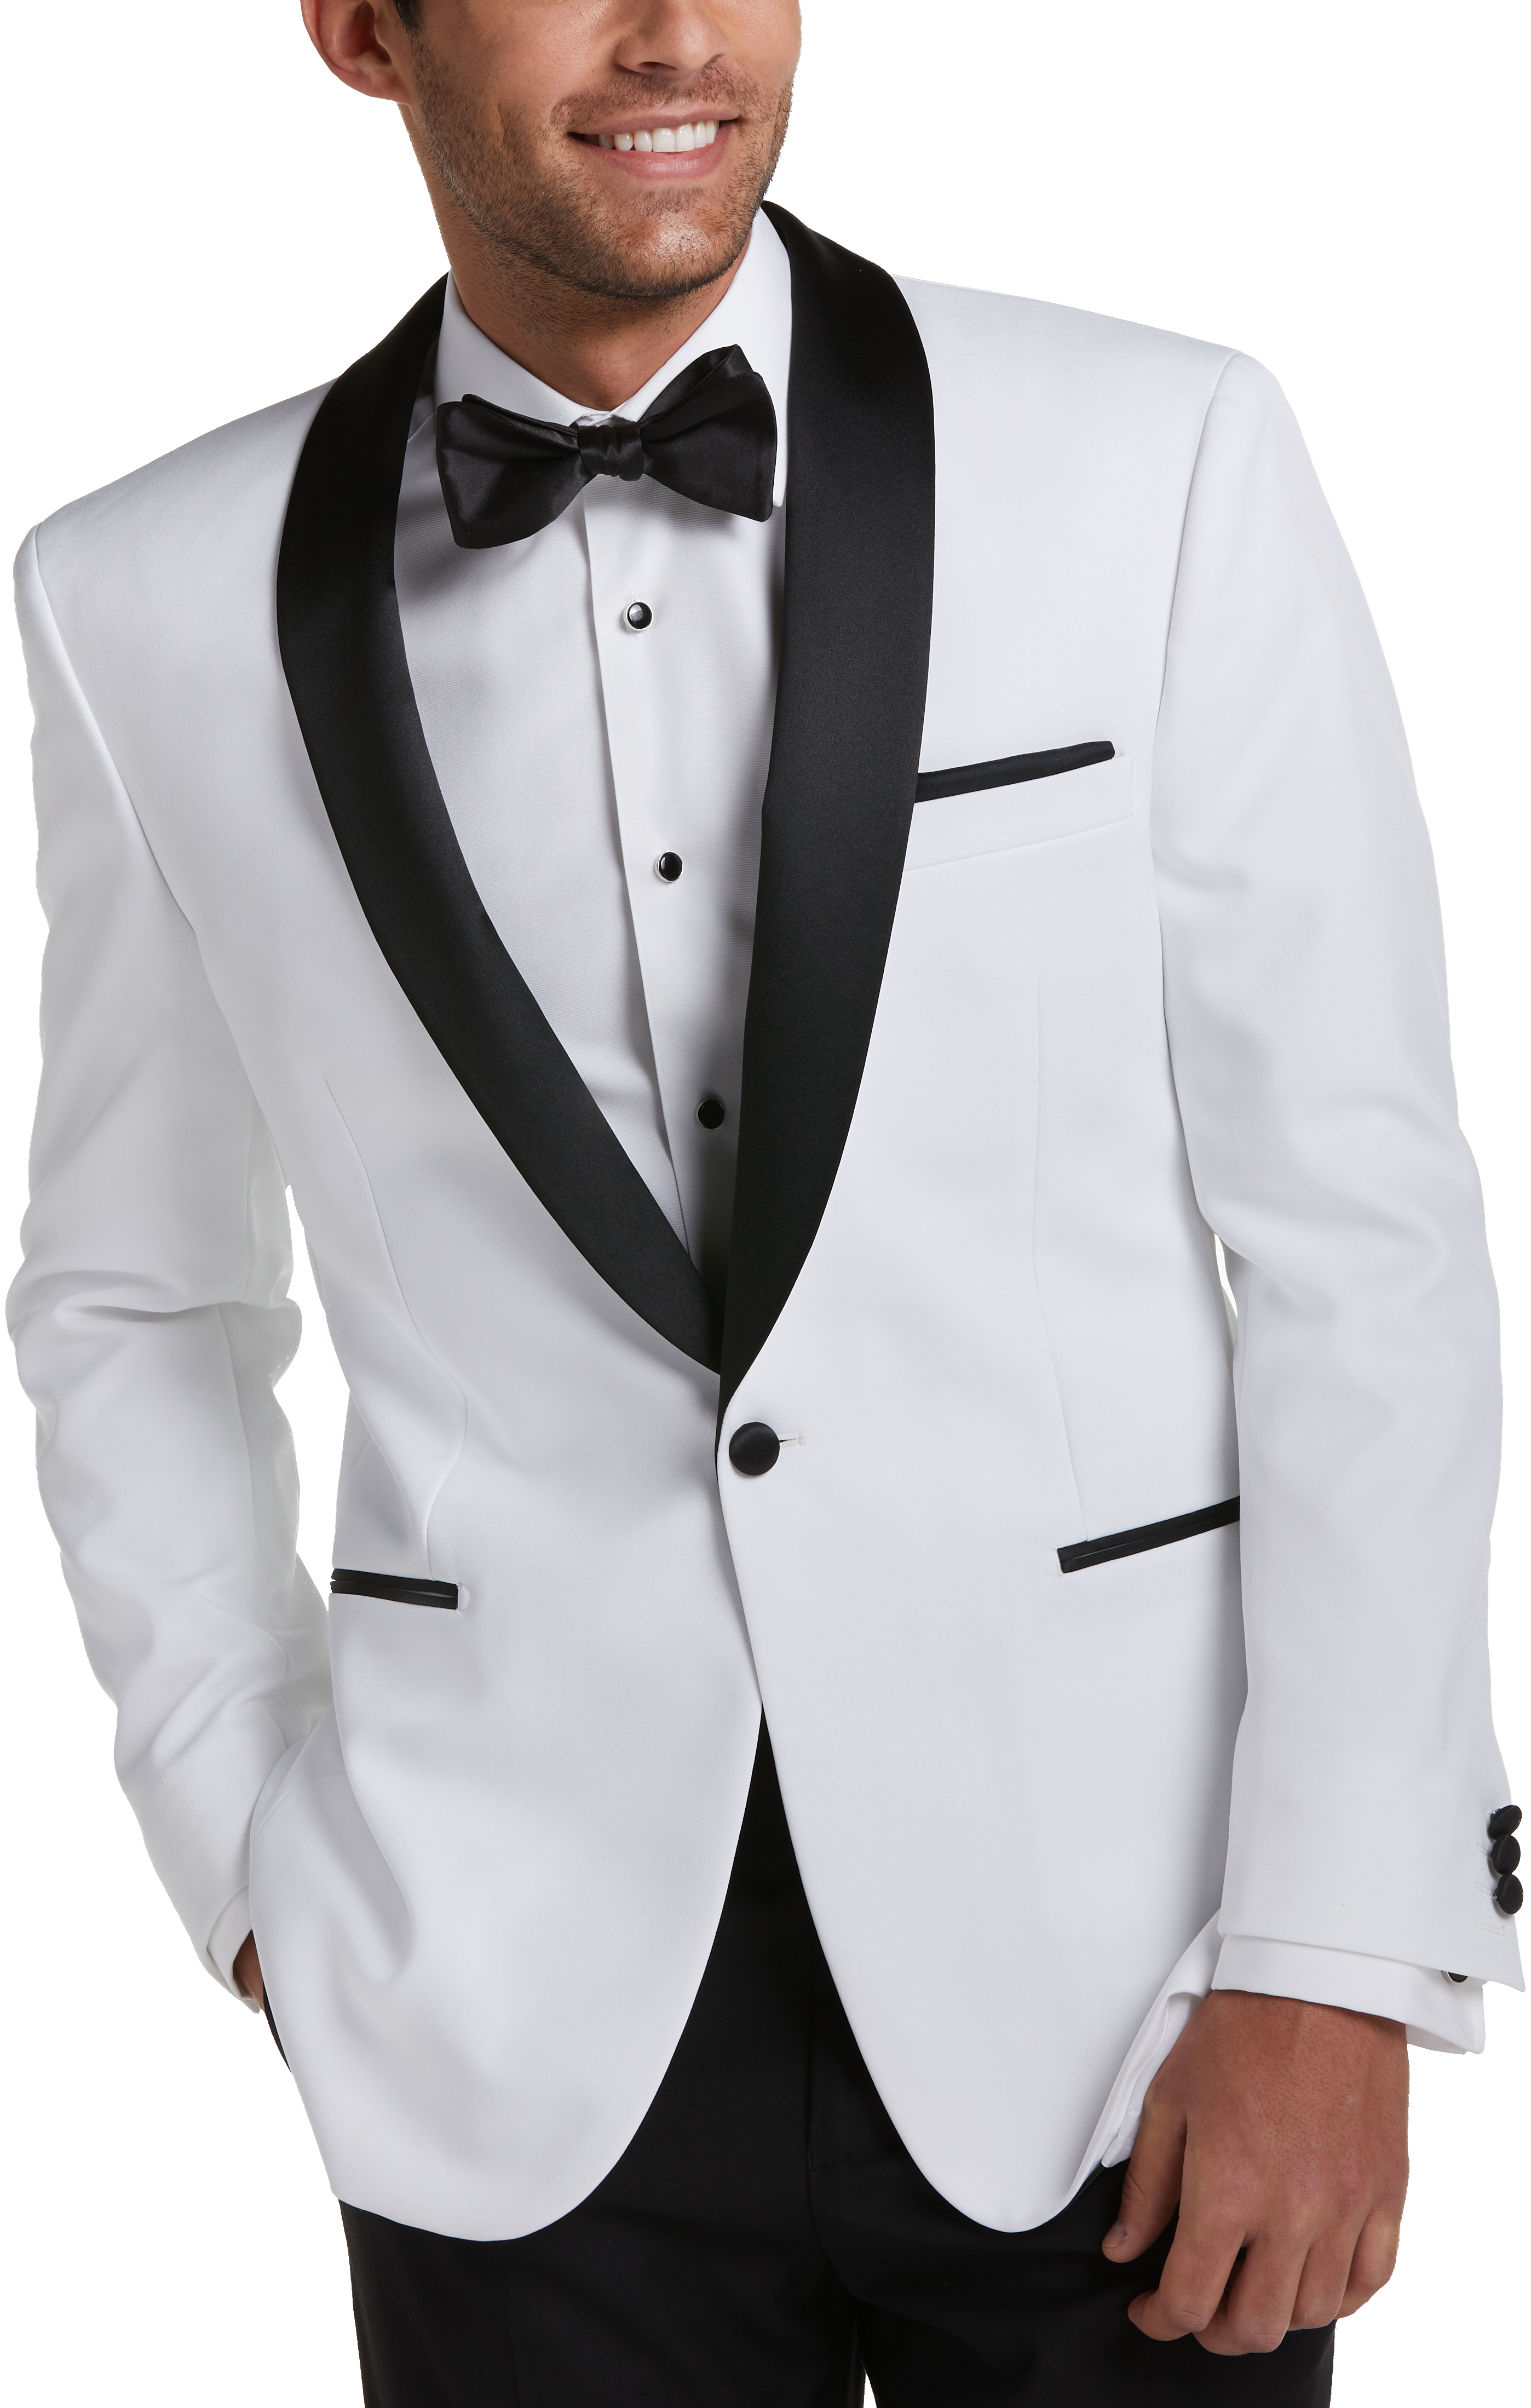 Features of a Custom Tailored Suit - Joe Button